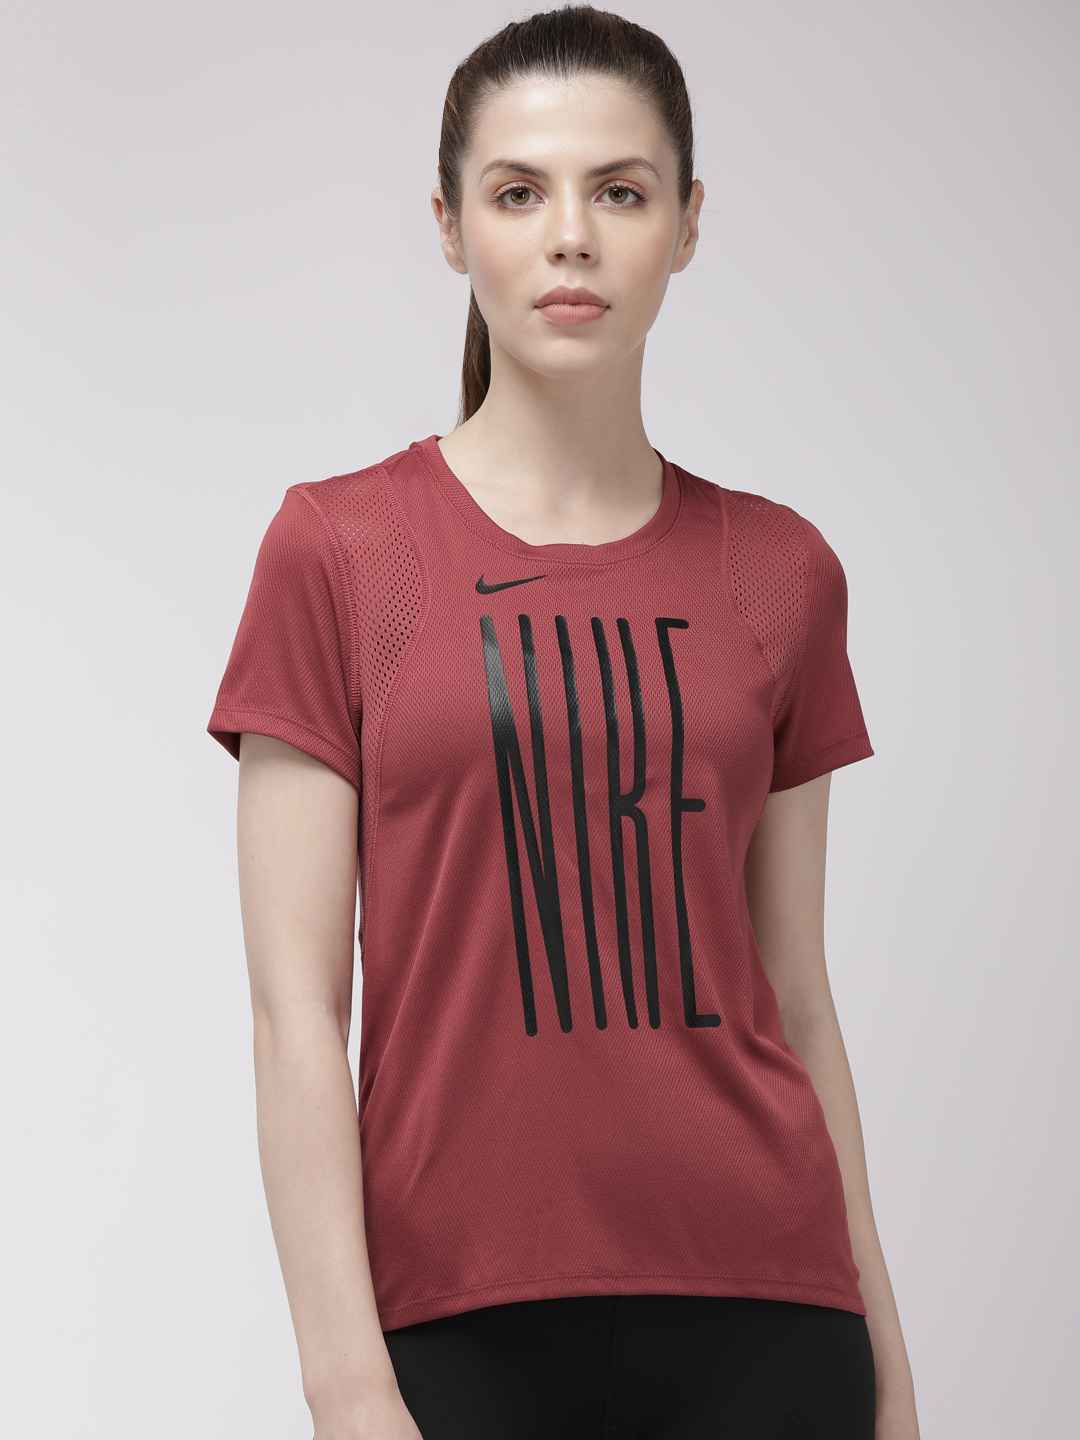 Nike-Women-Red-Printed-Top